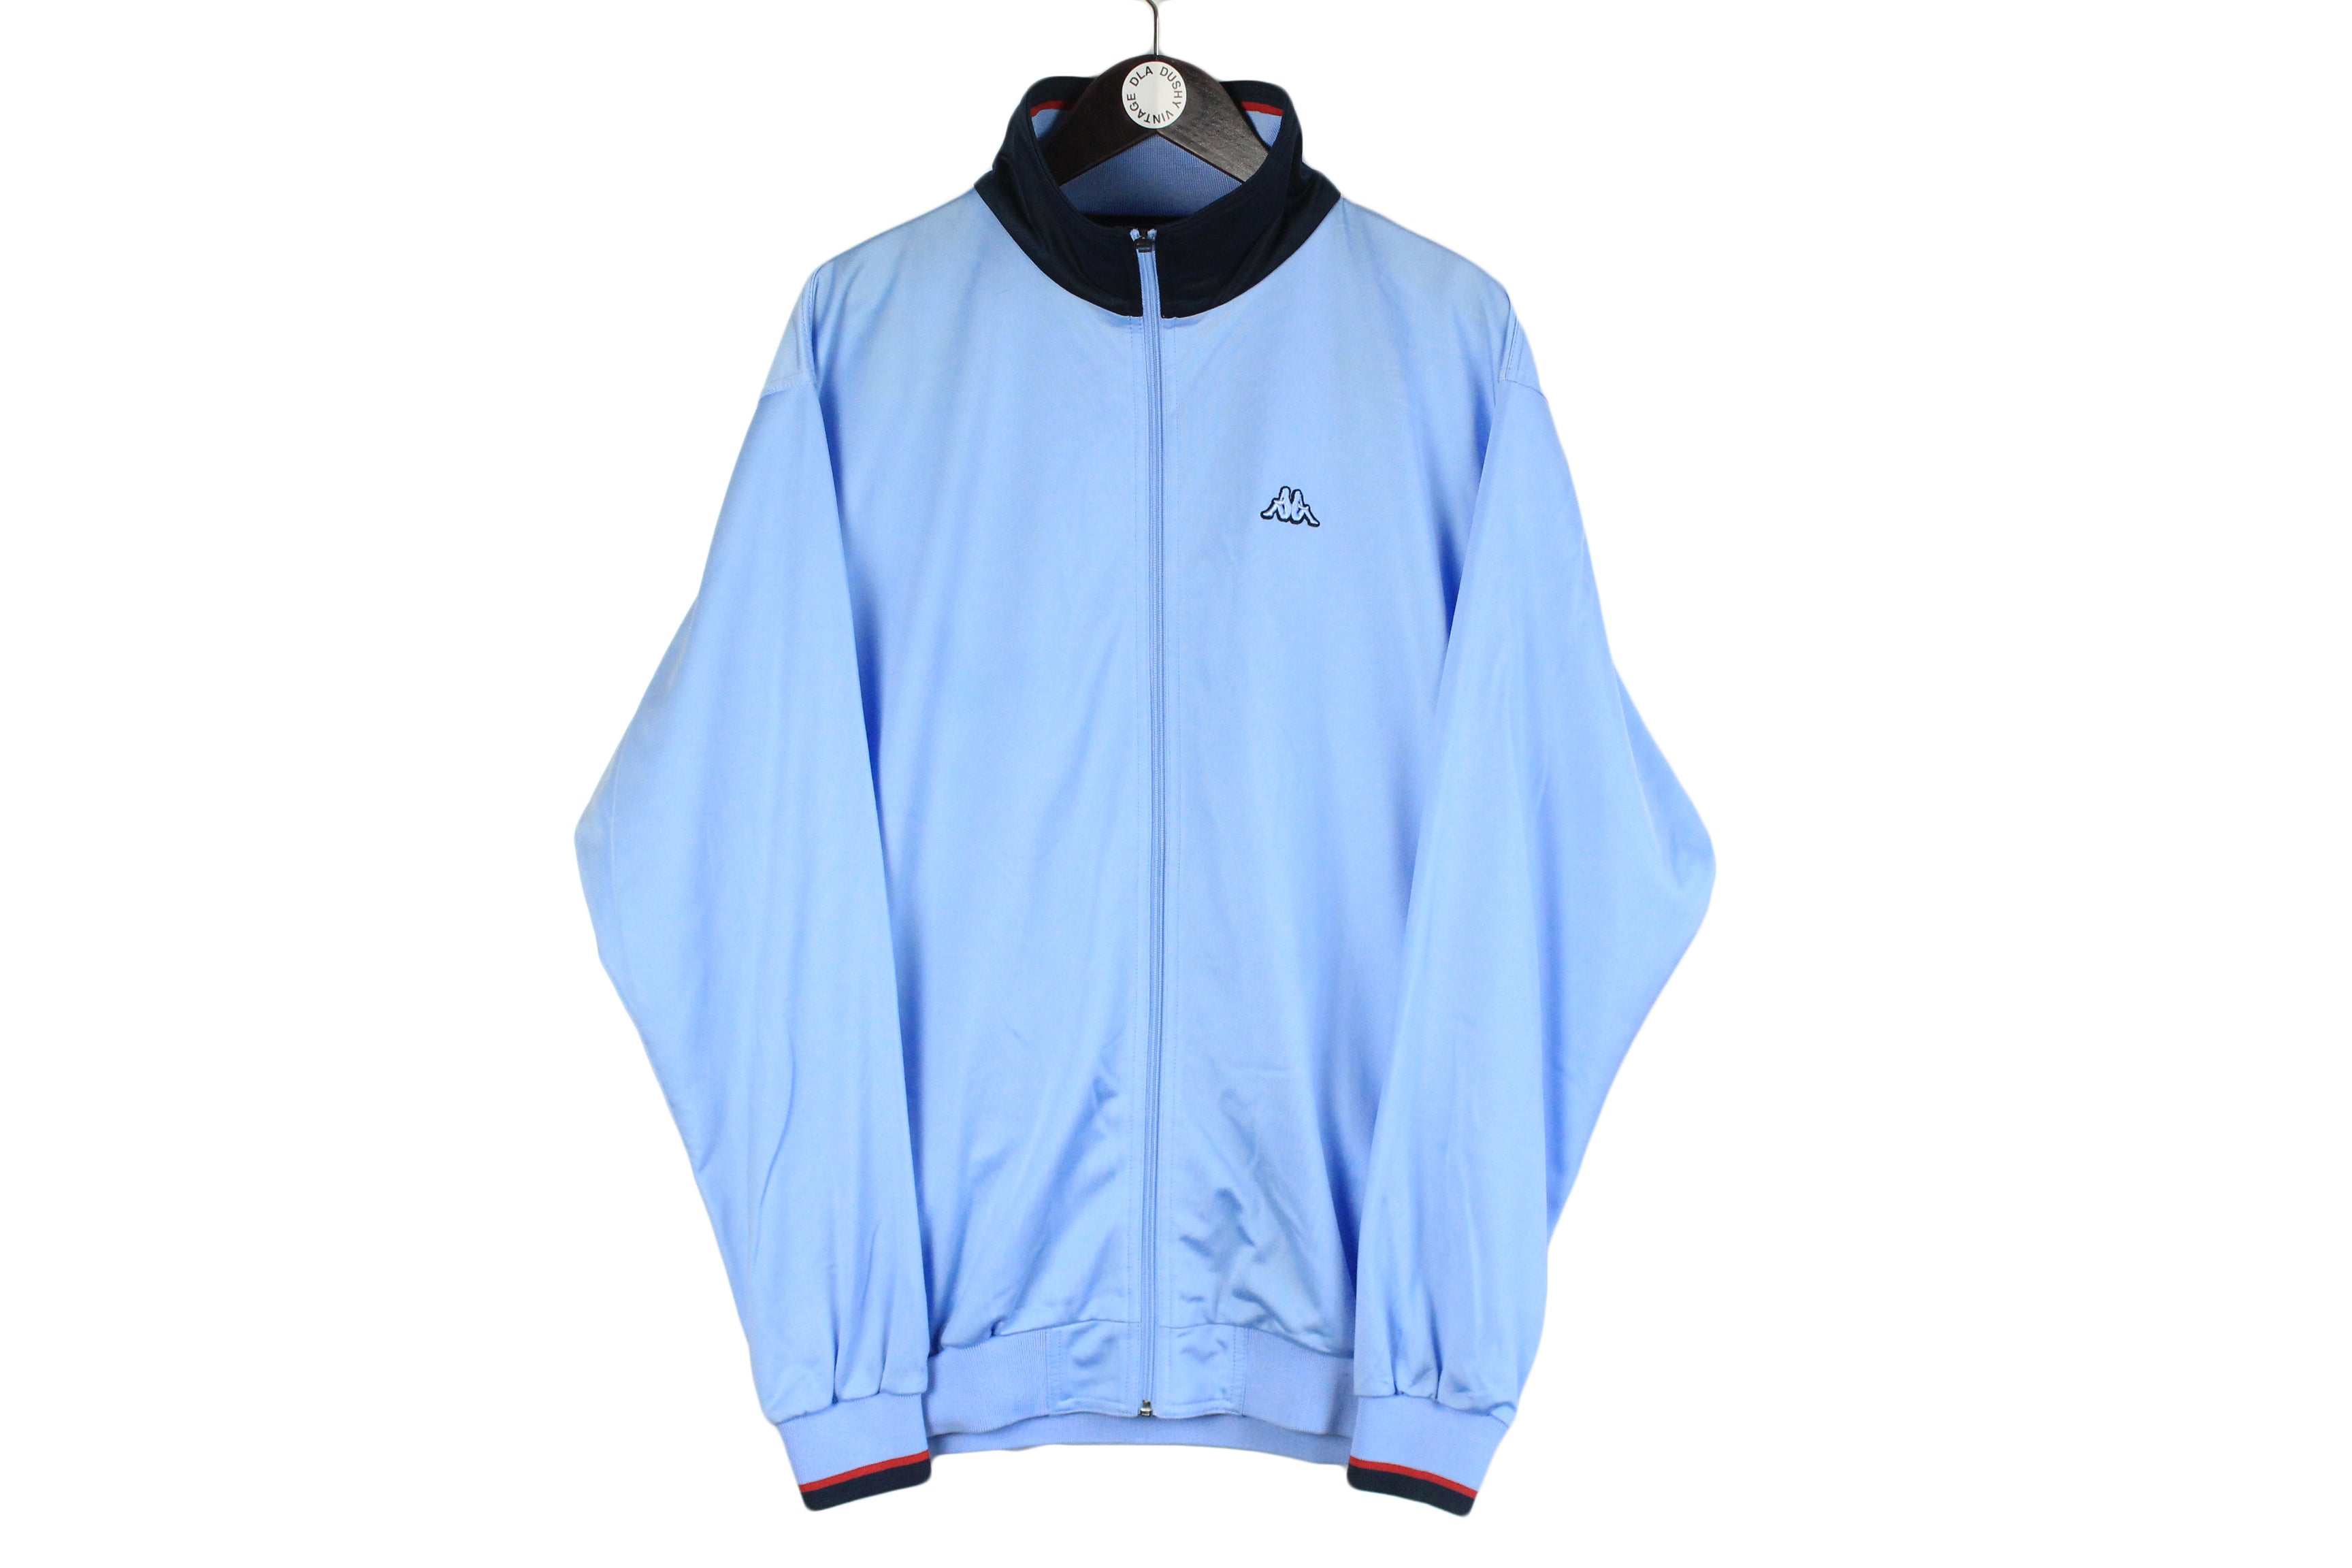 Retrospect Clothing - 90s Kappa 🔥 Full range of track jacket